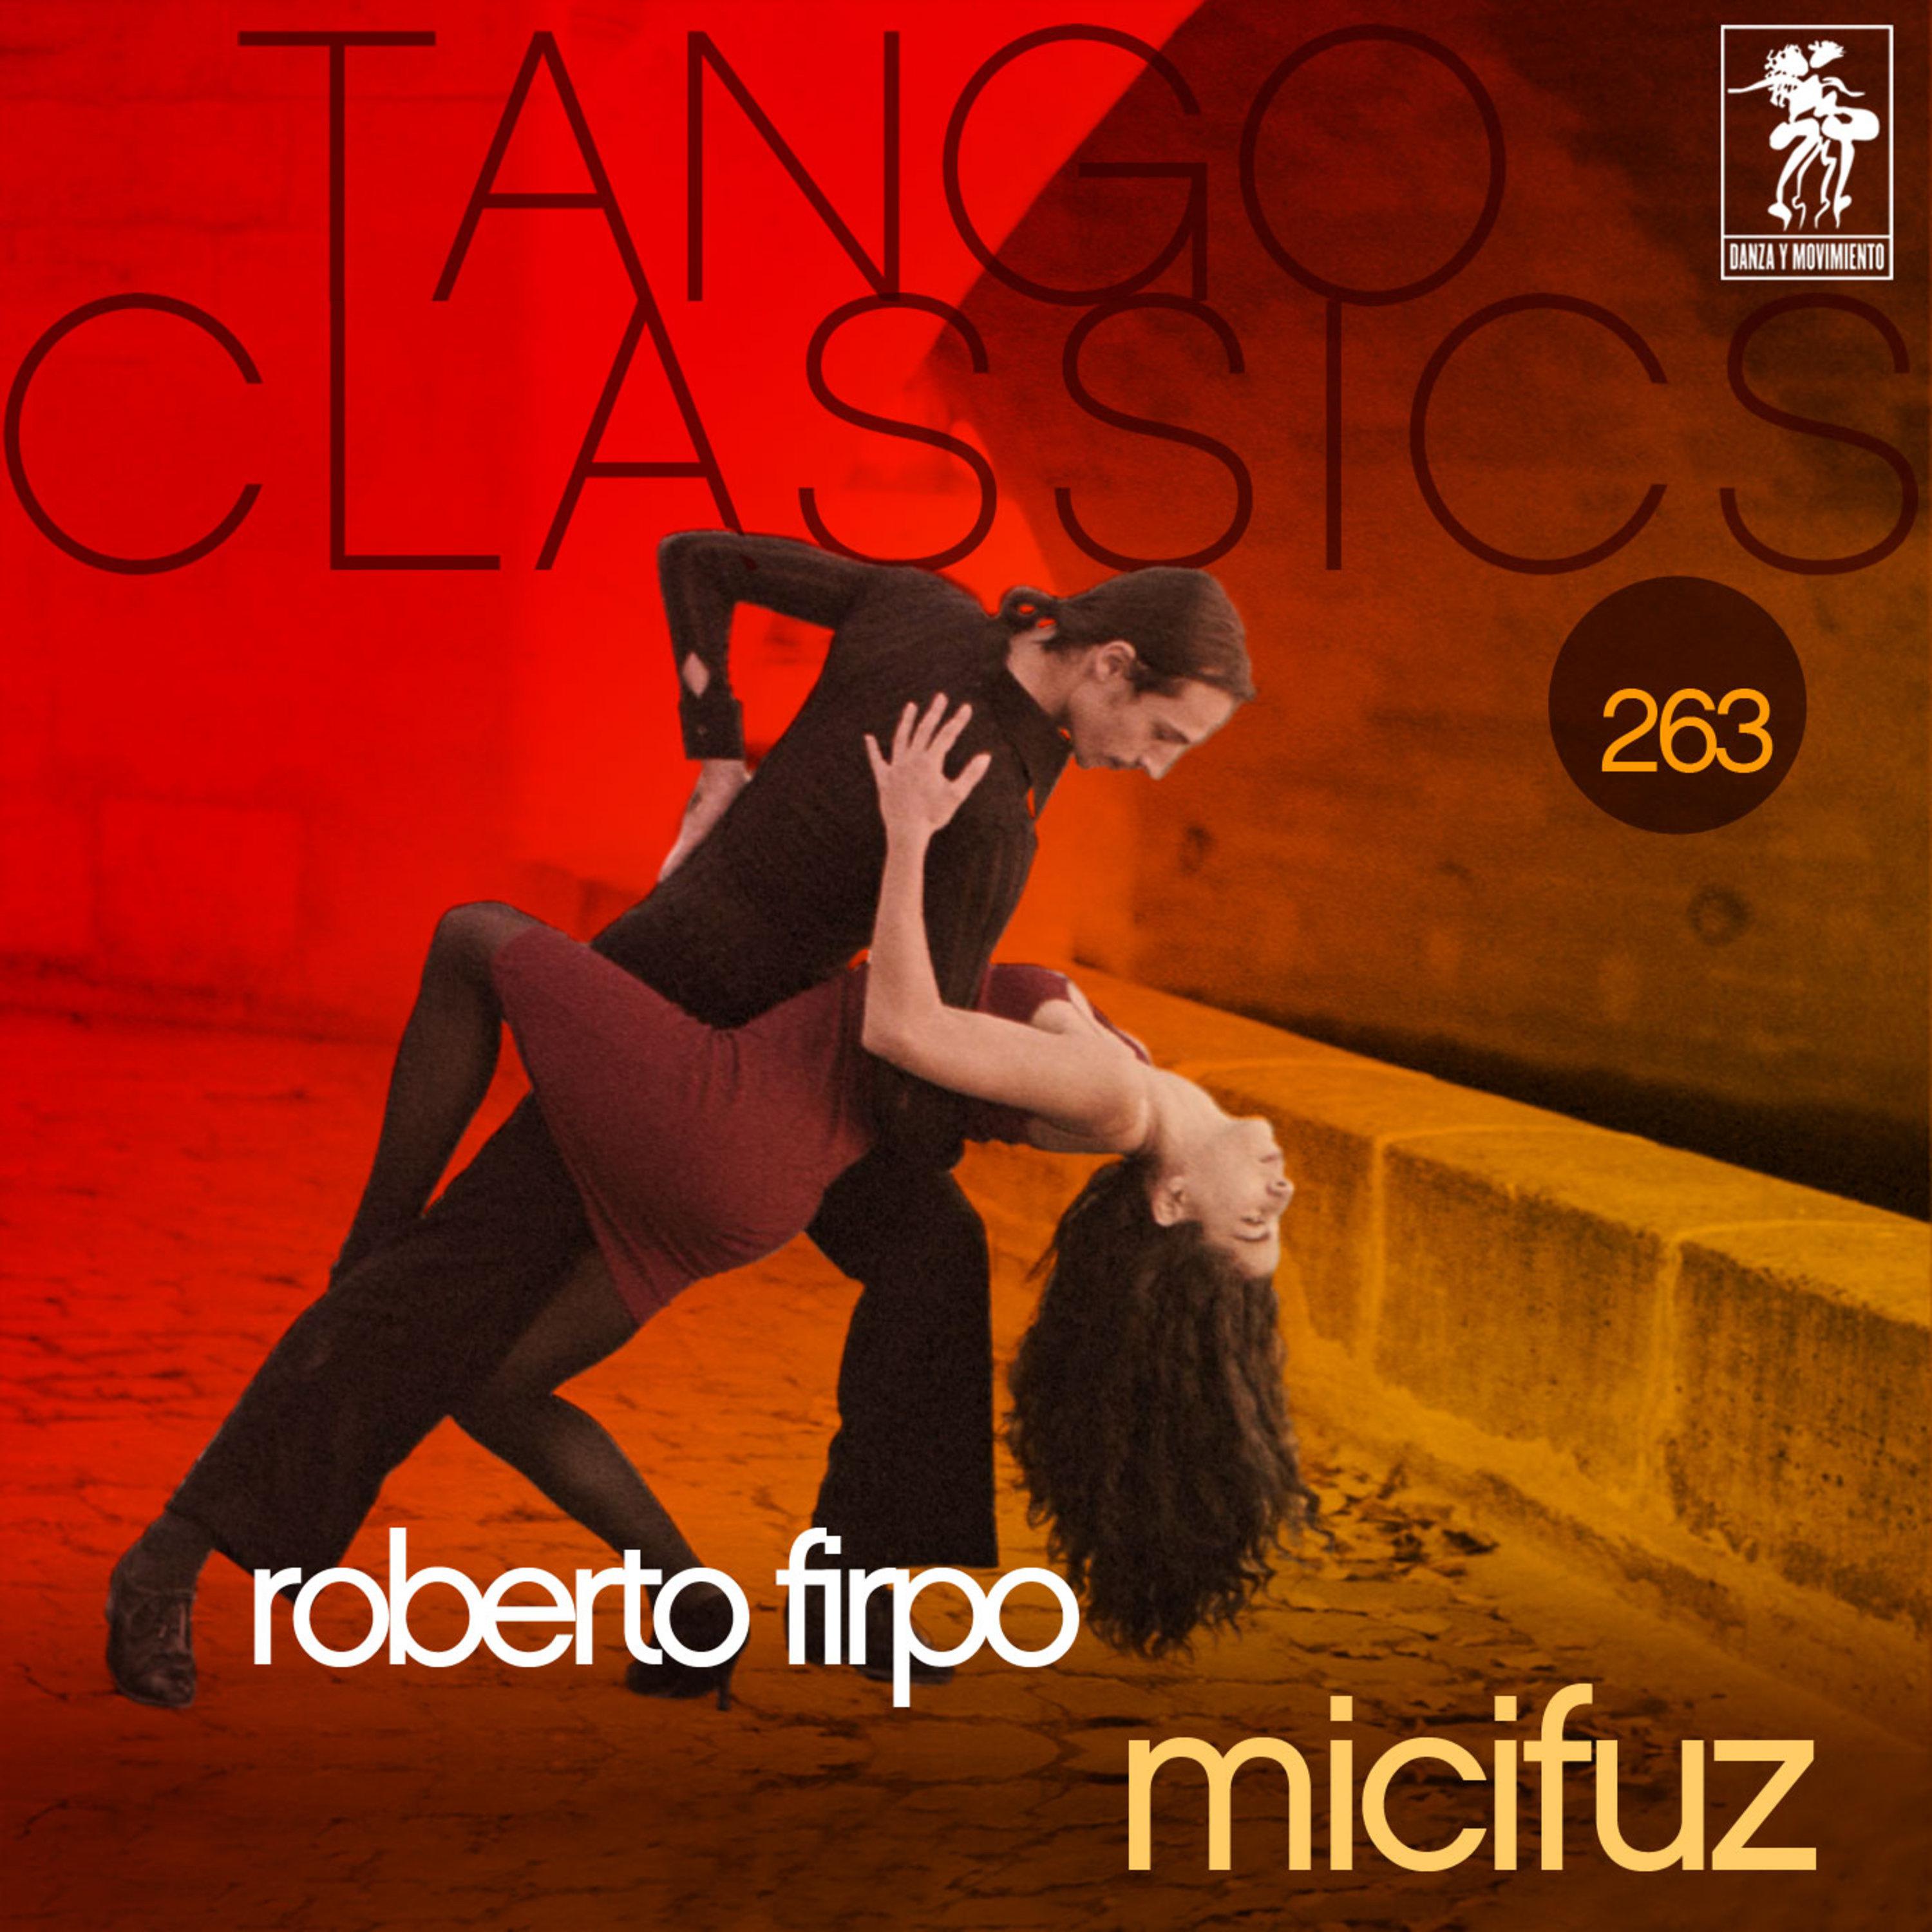 Tango Classics 263: Micifuz